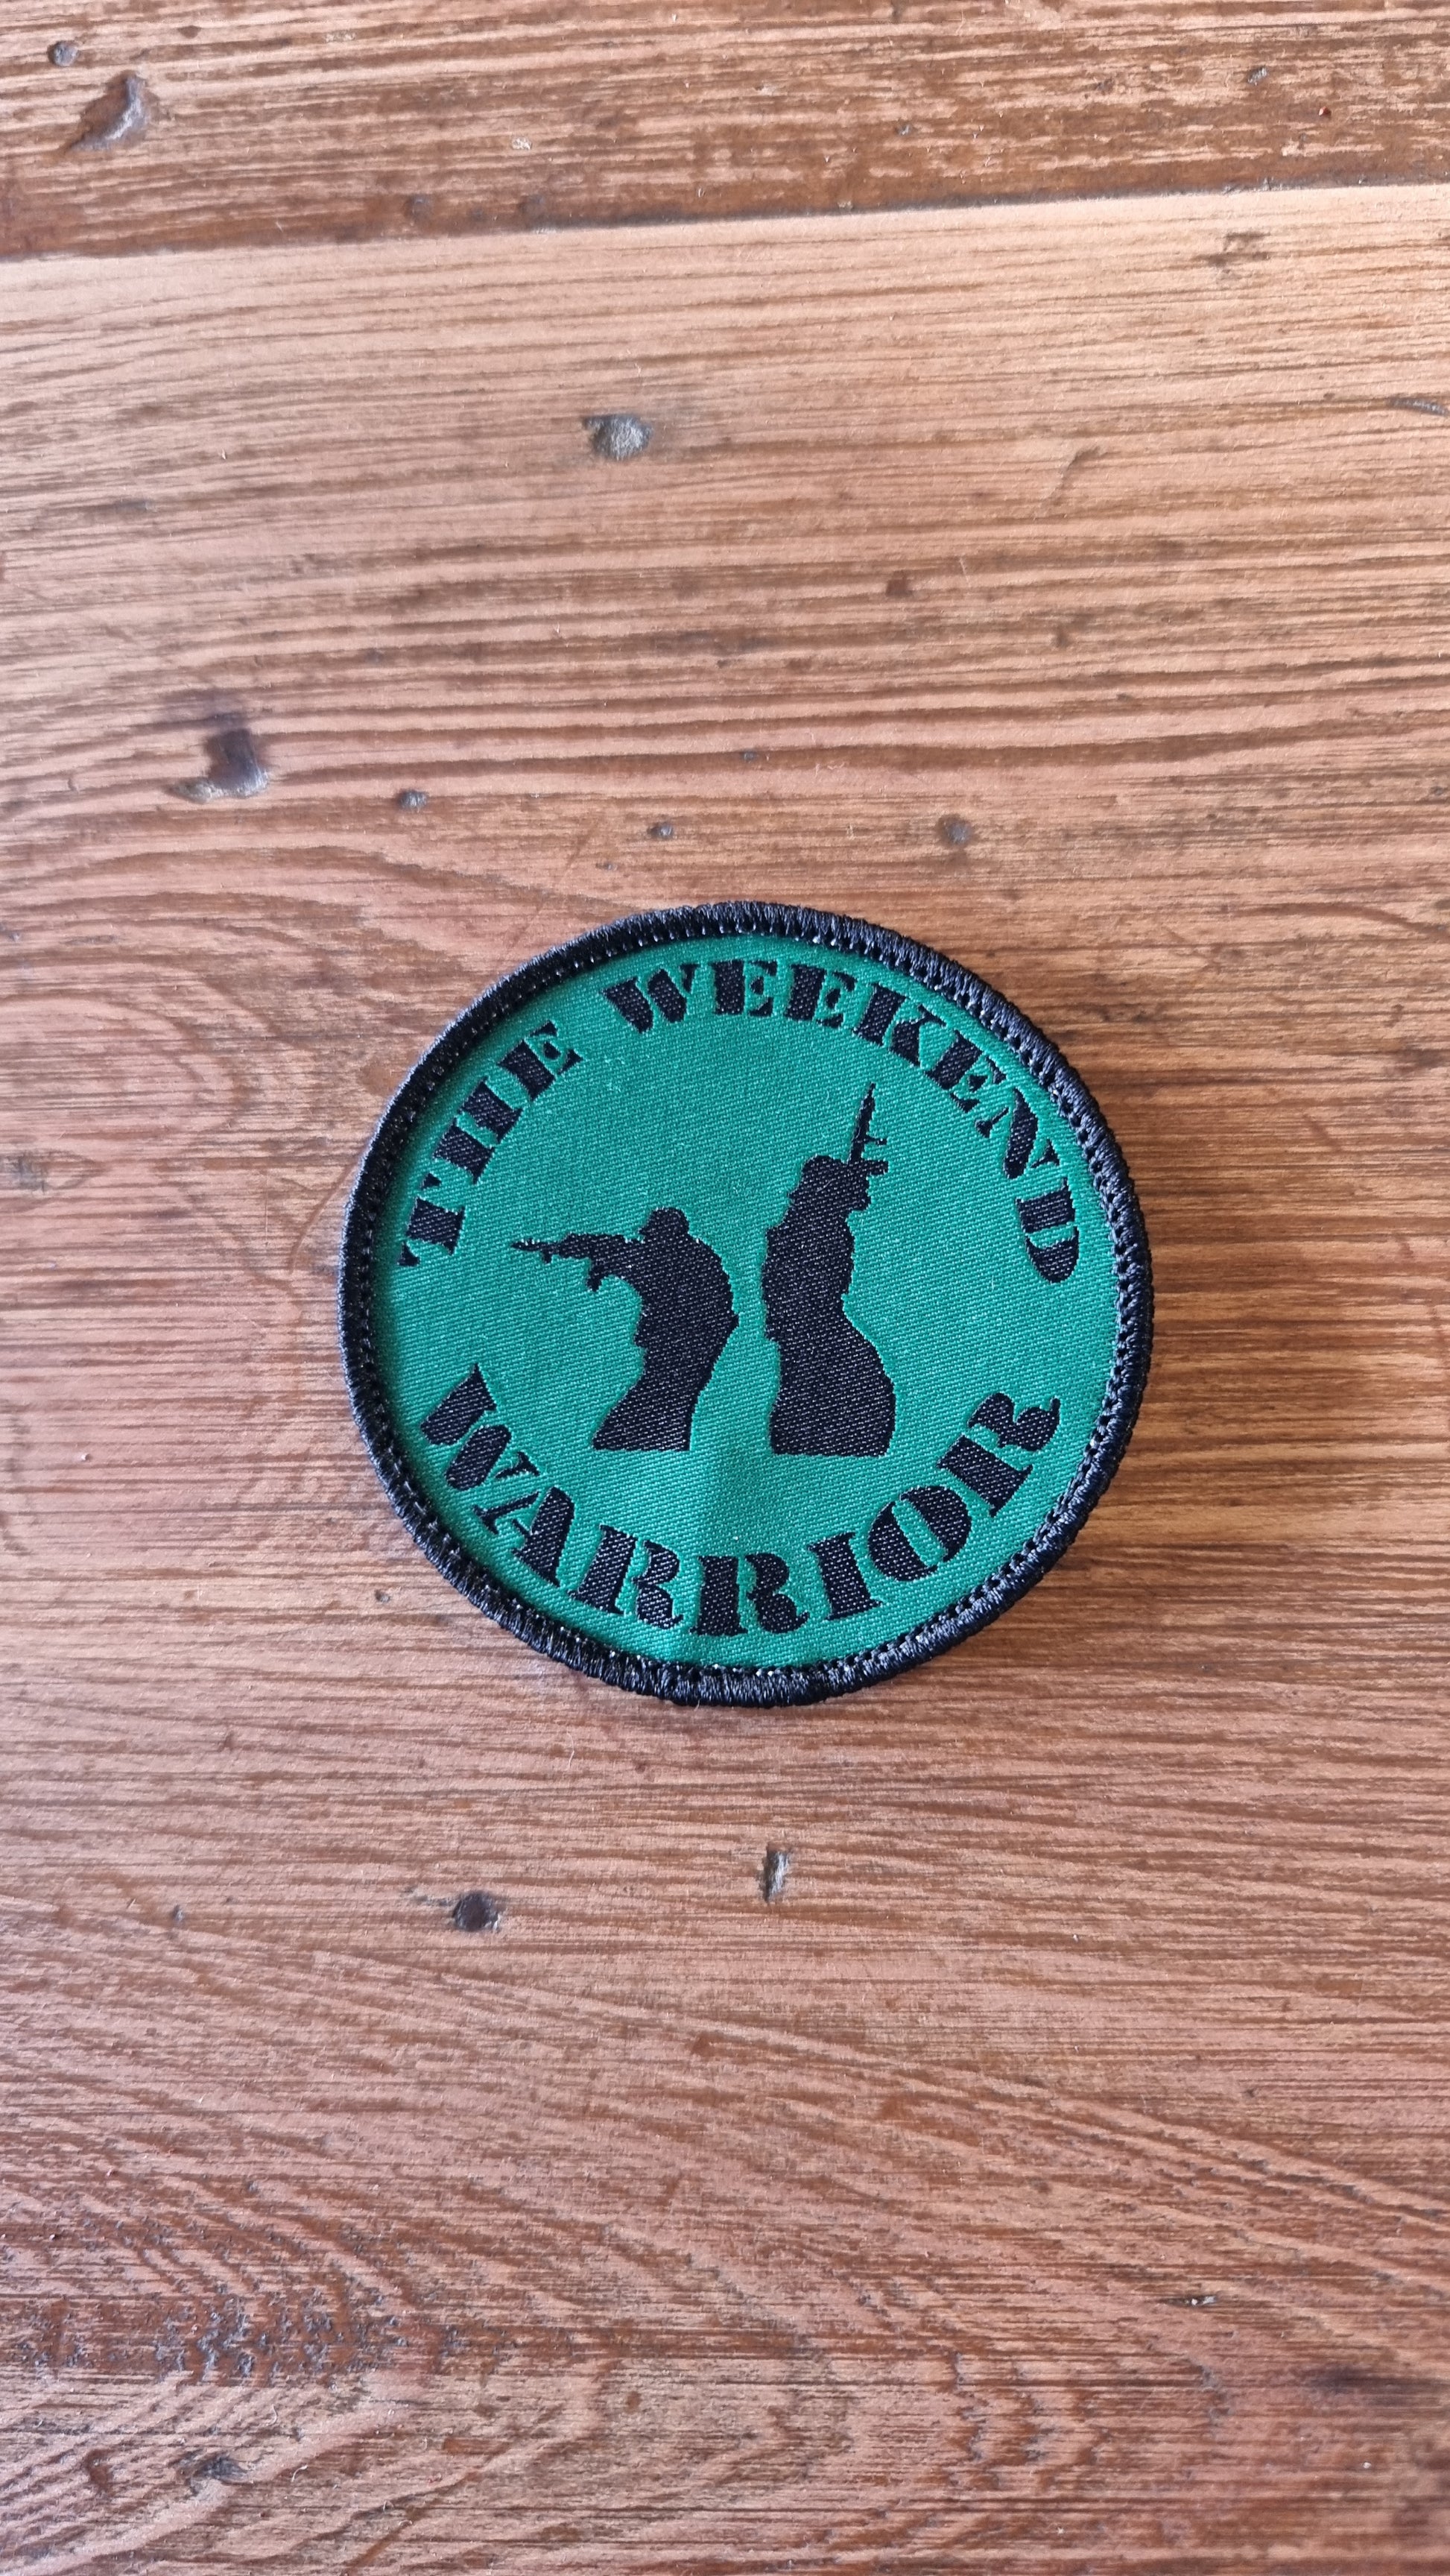 Weekend Warrior - Overlanding Morale Patch (velcro backed)